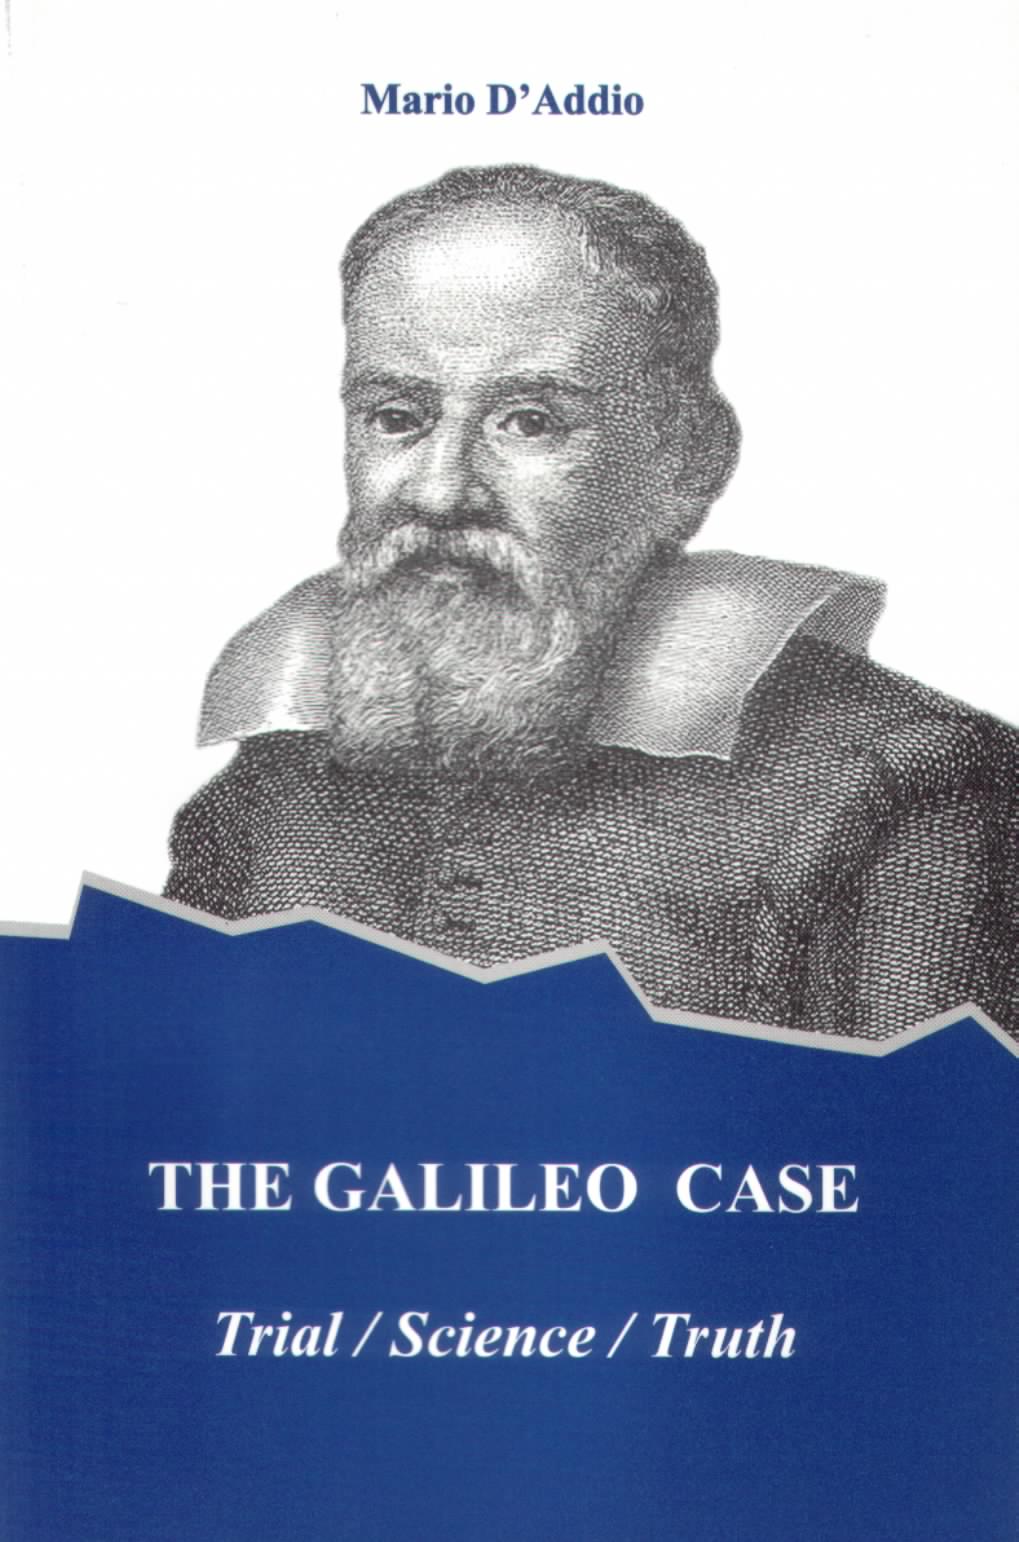 The Galileo Case: Trial, Science, Truth / Mario D'Addio